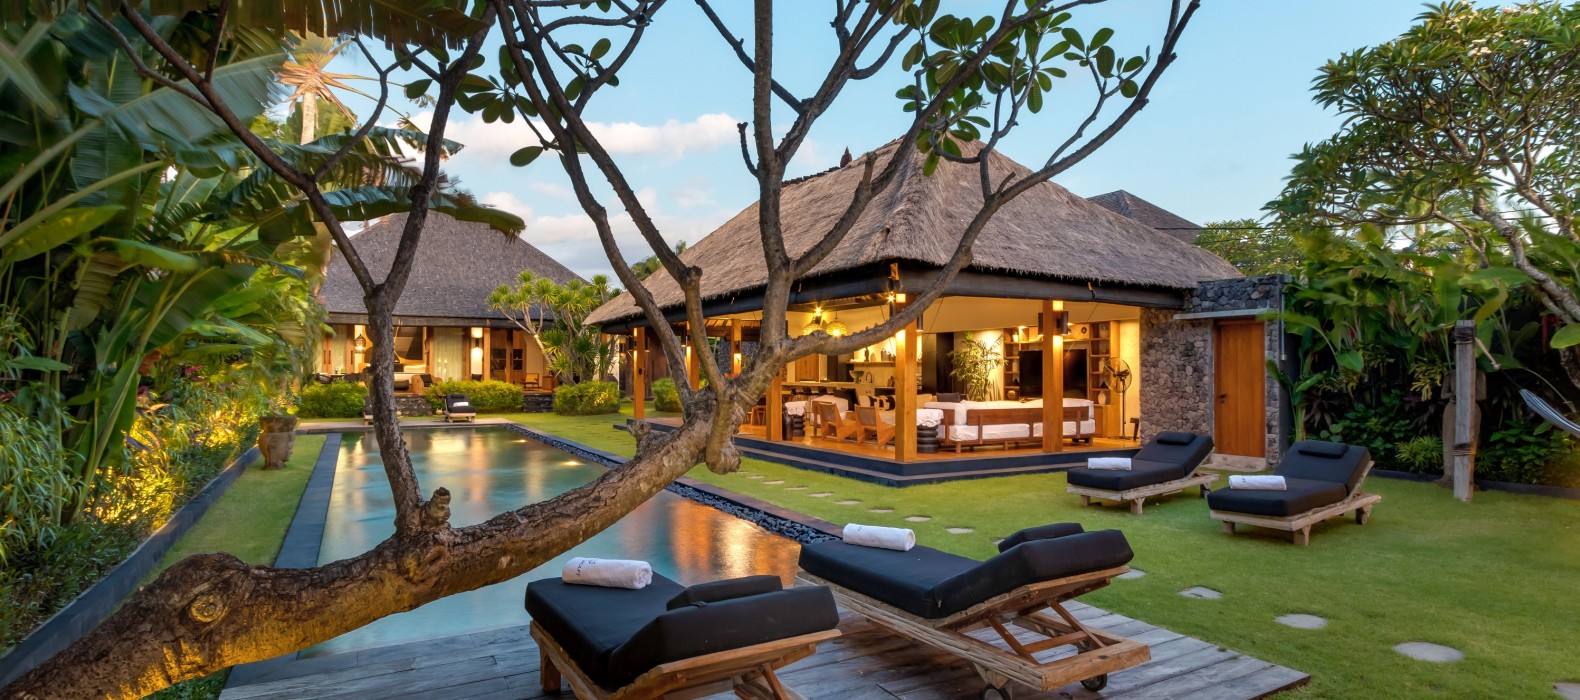 Exterior pool area of Villa Wolfe in Bali